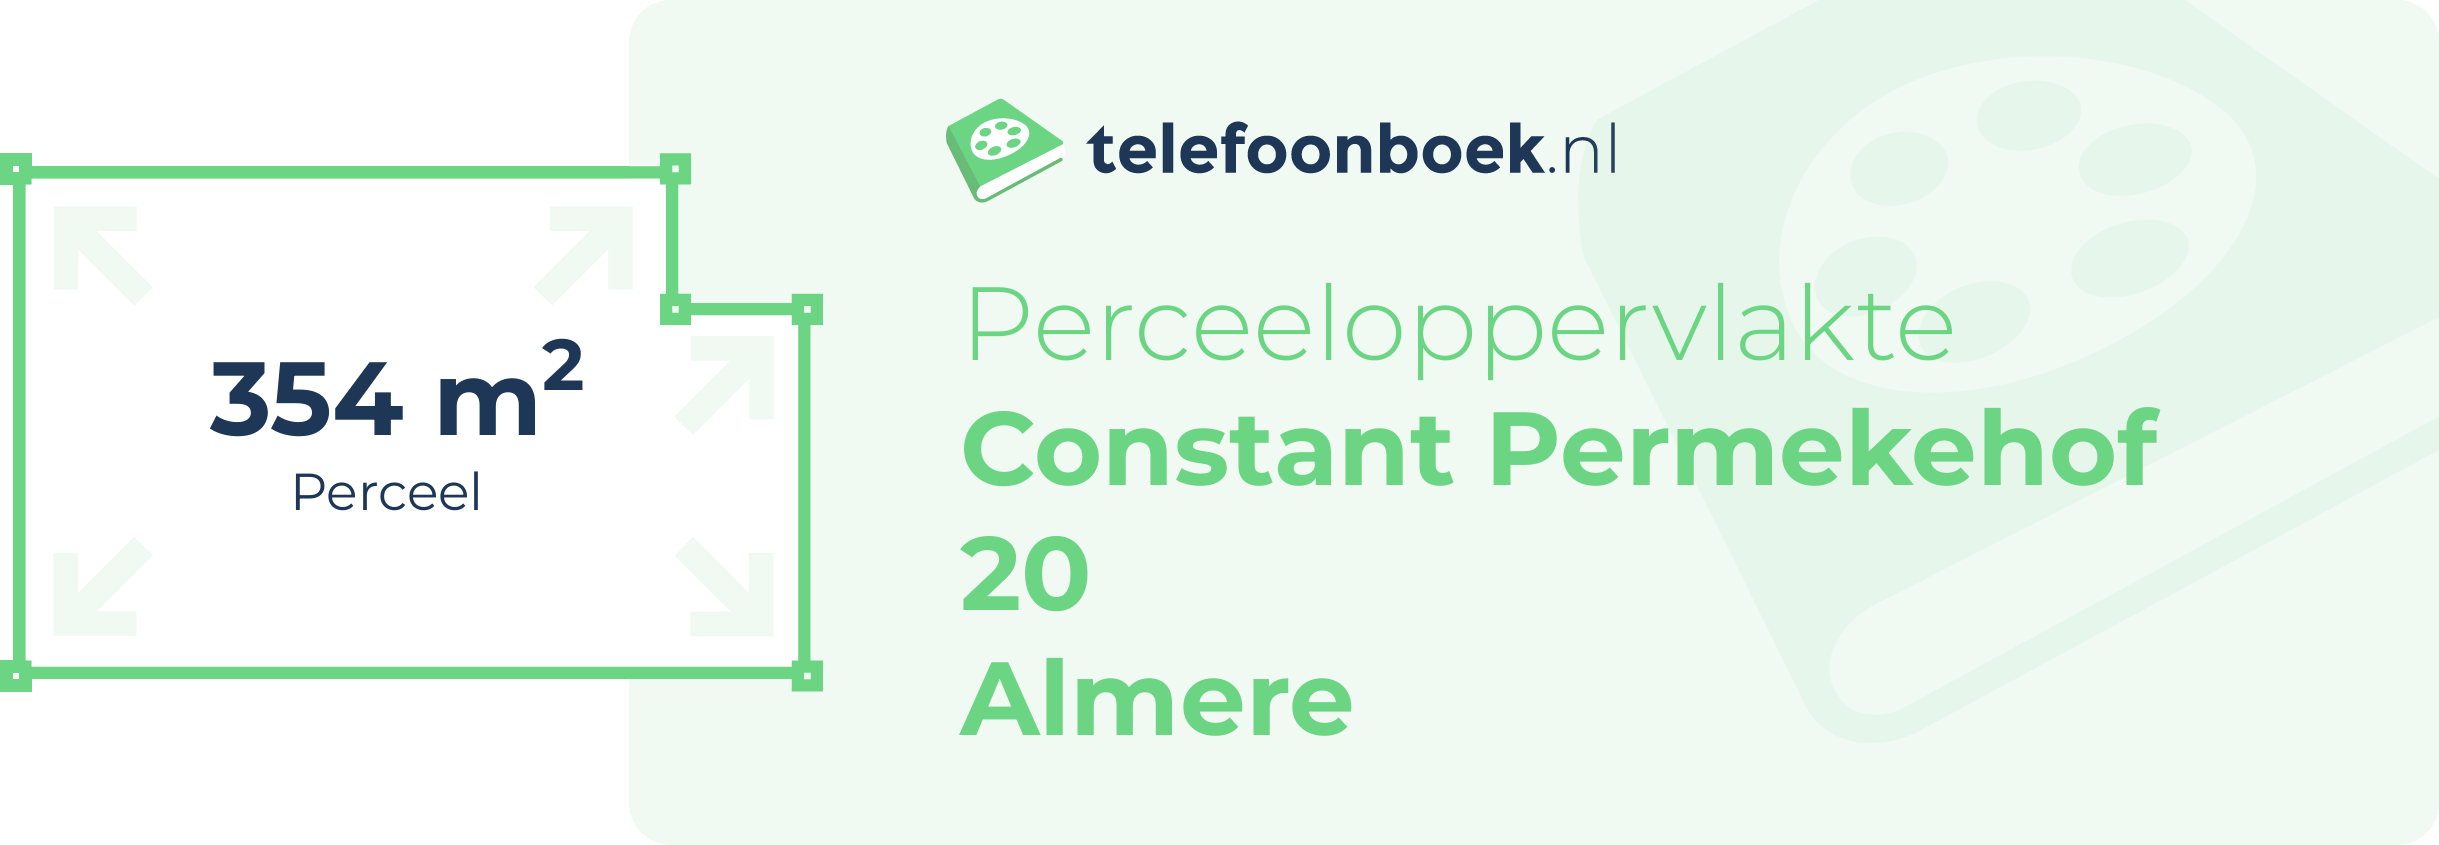 Perceeloppervlakte Constant Permekehof 20 Almere